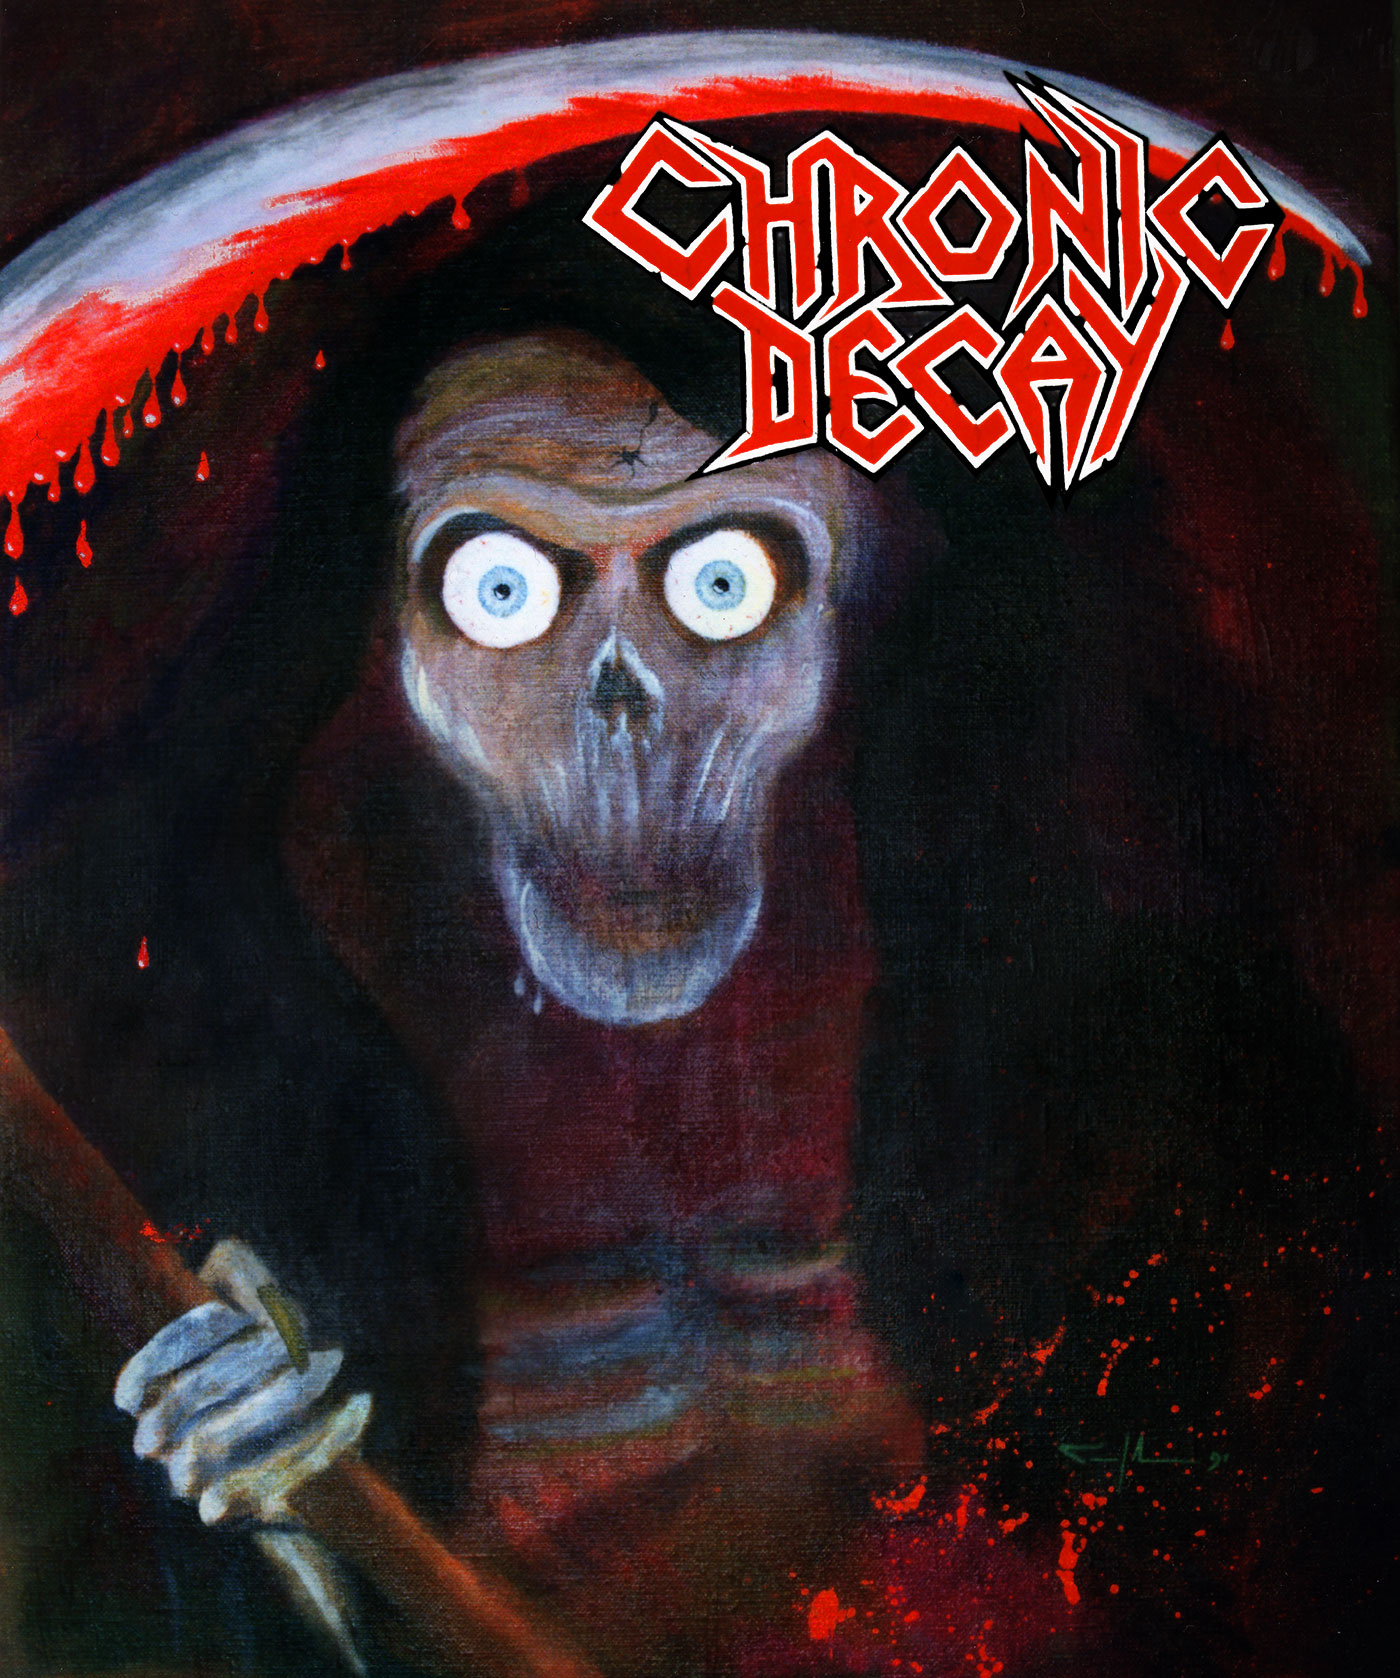 Chronic Decay Justify Your Existence original album artwork